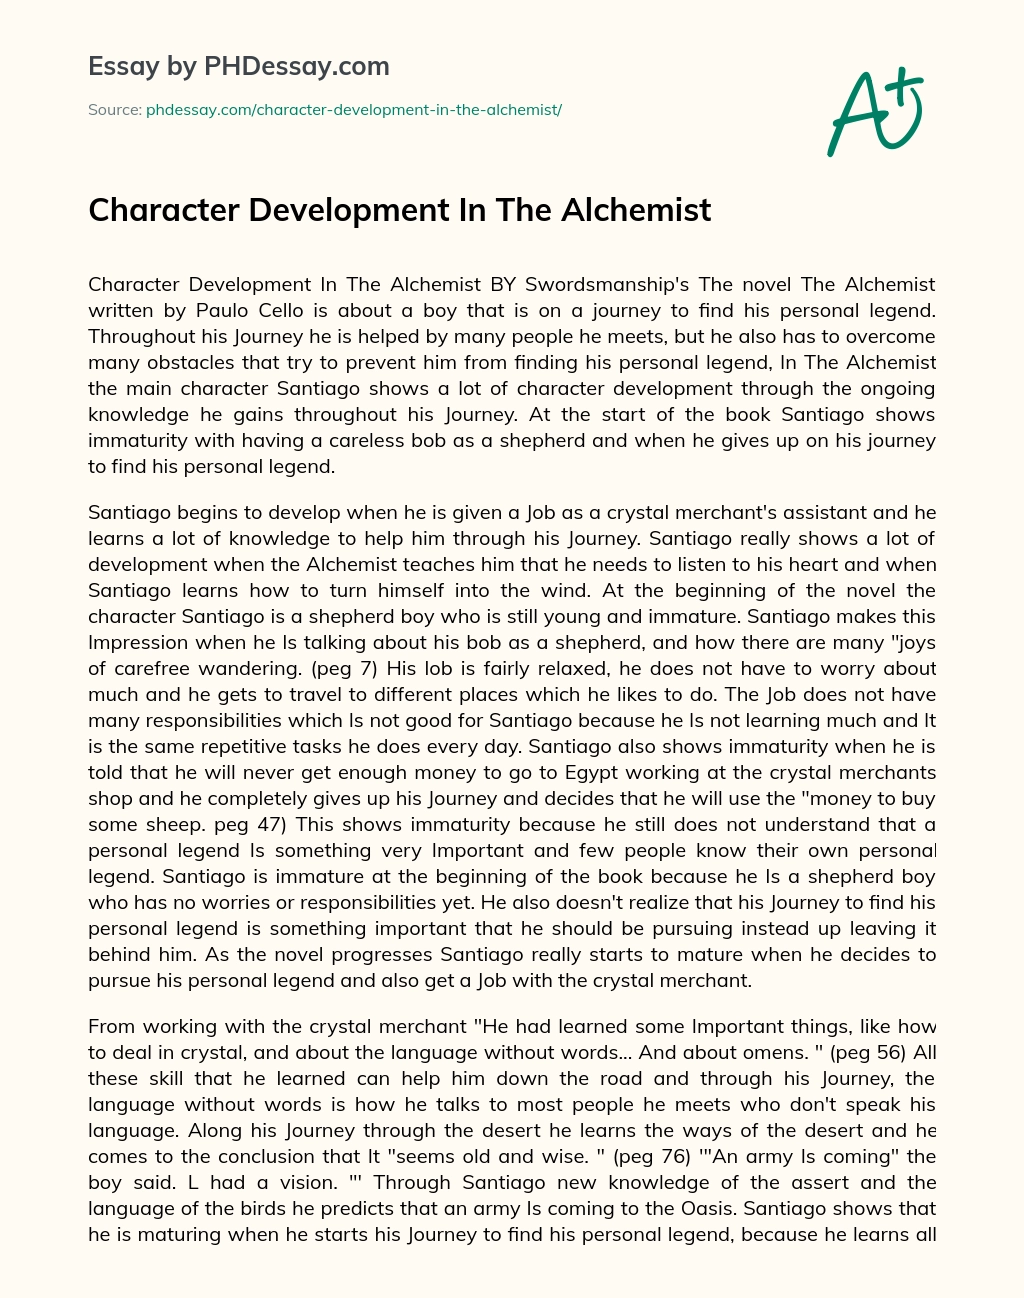 Character Development In The Alchemist essay